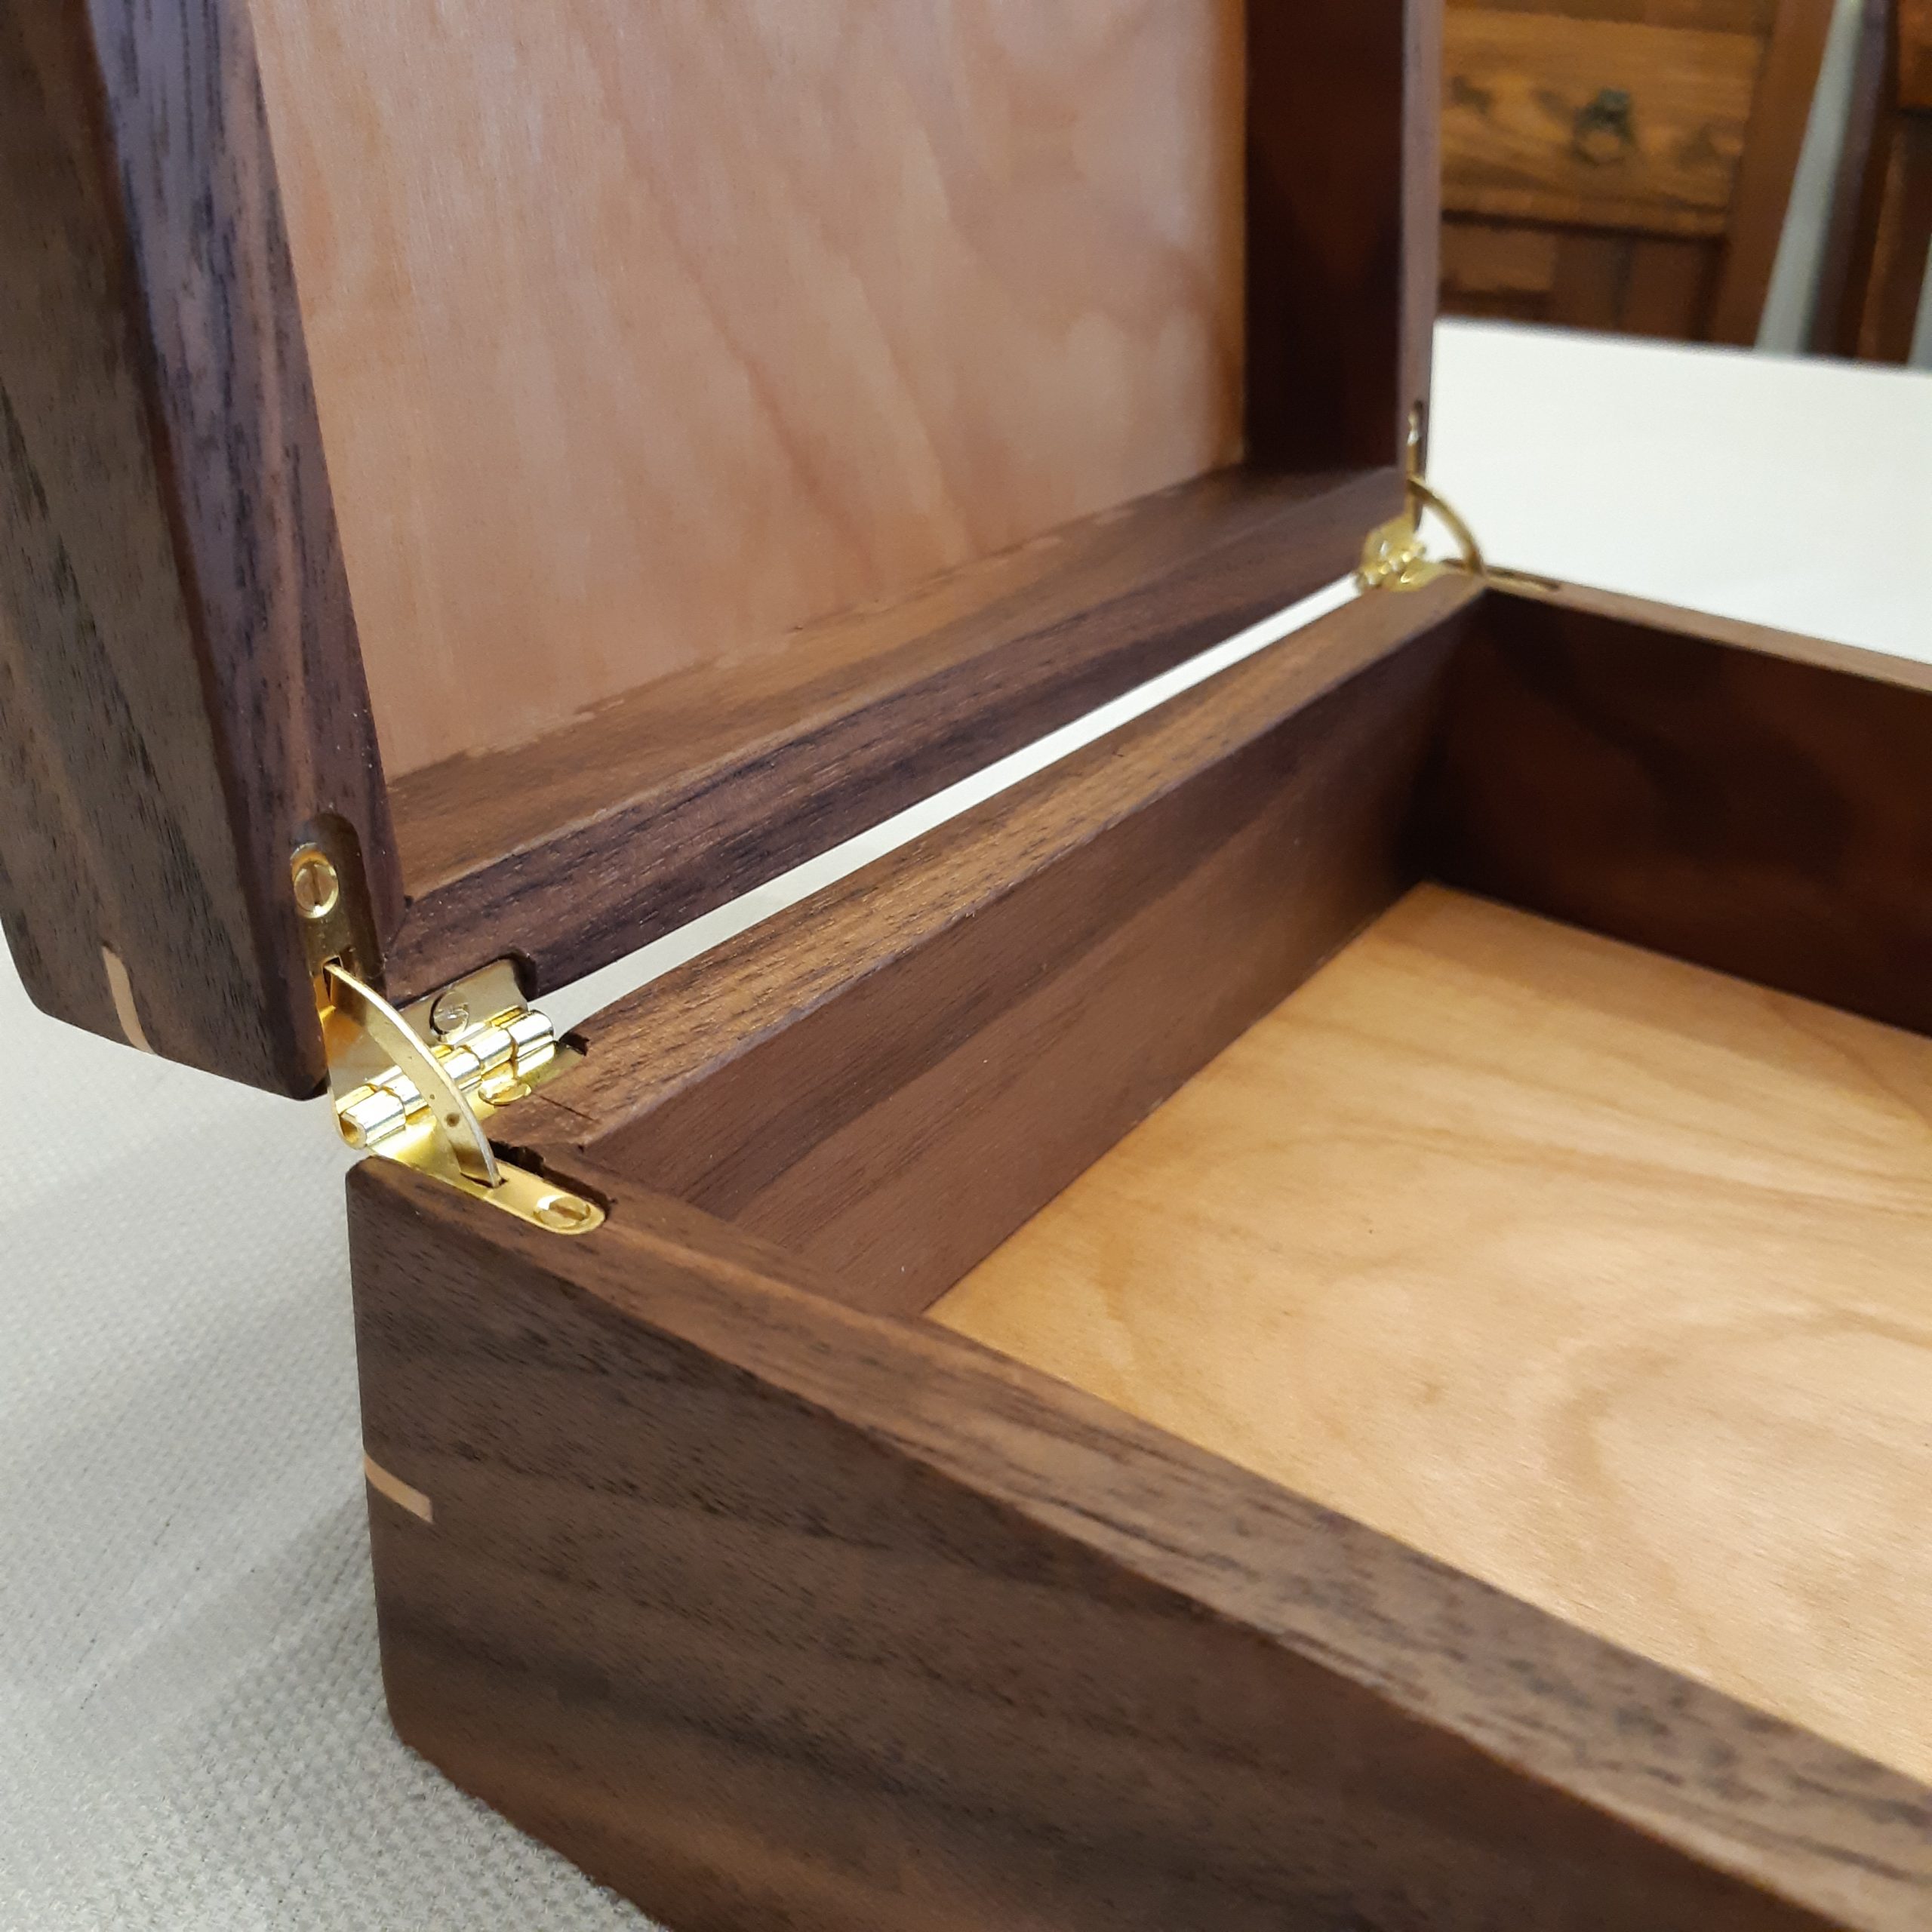 wooden stash box hinge